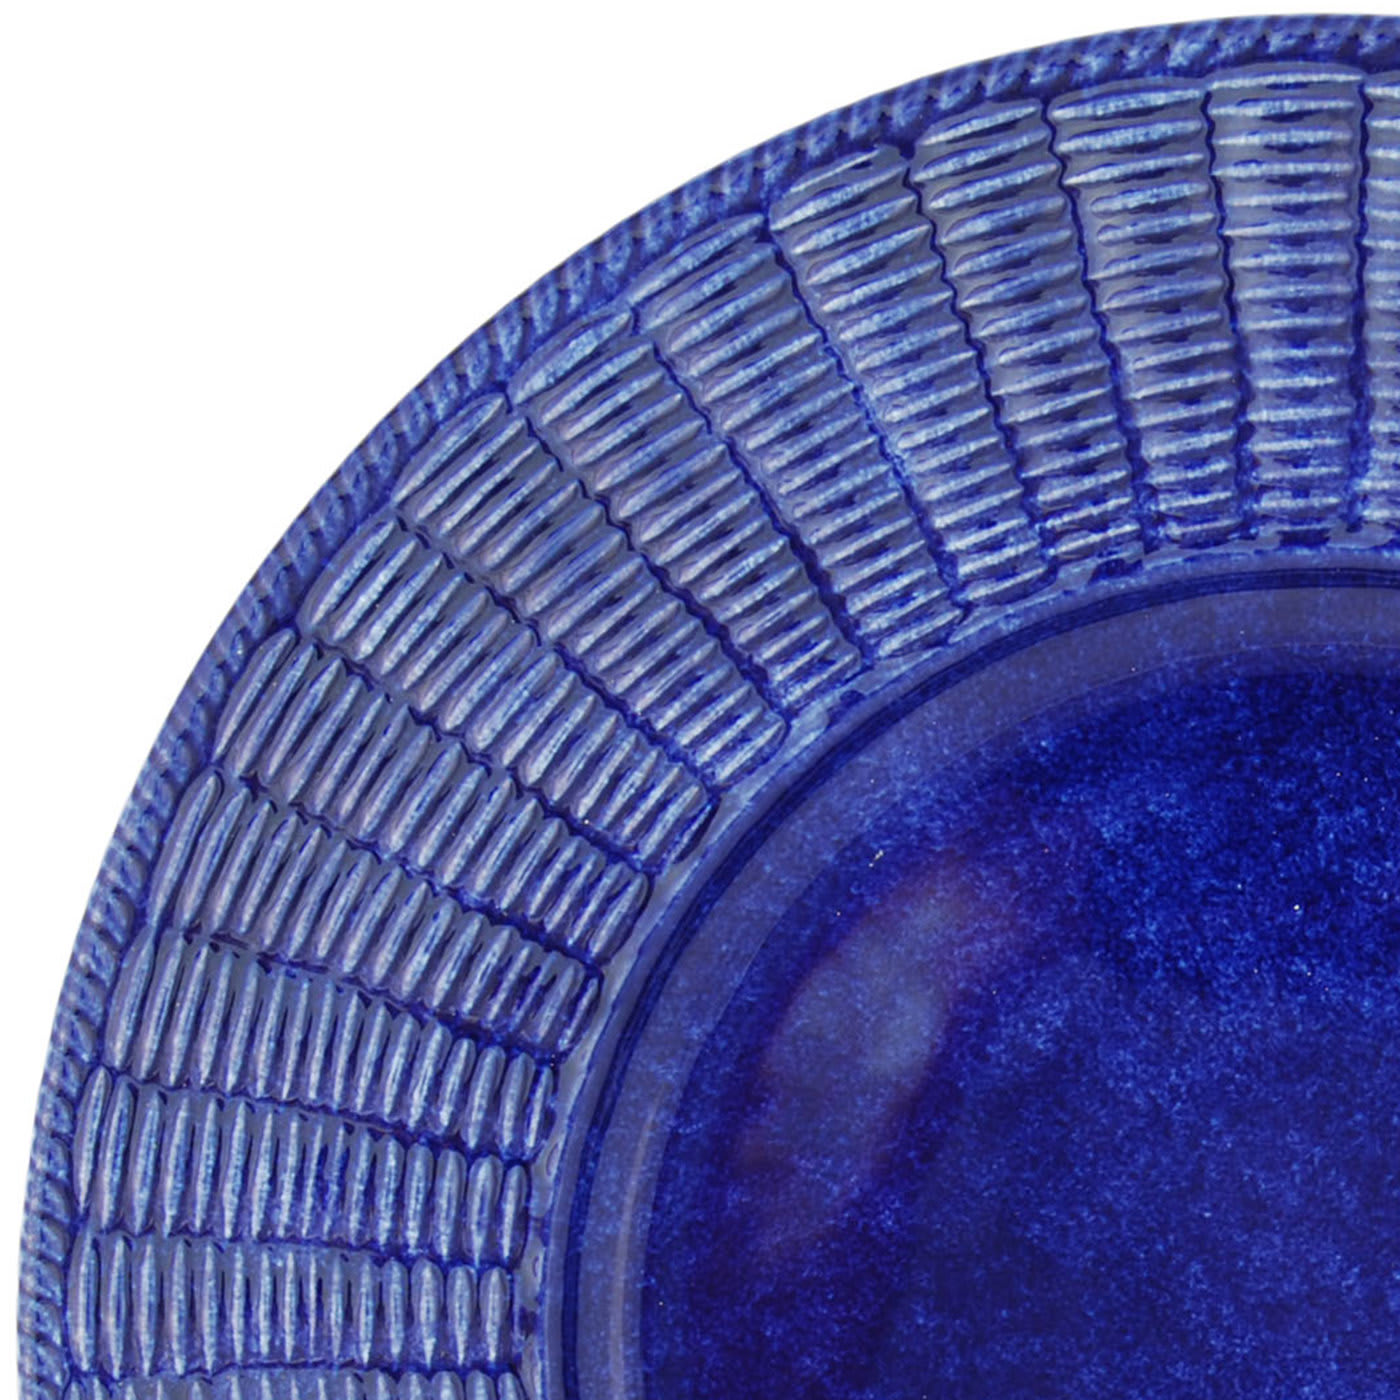 Set of 4 Cobalto Wicker Ceramic Plates - Este Ceramiche